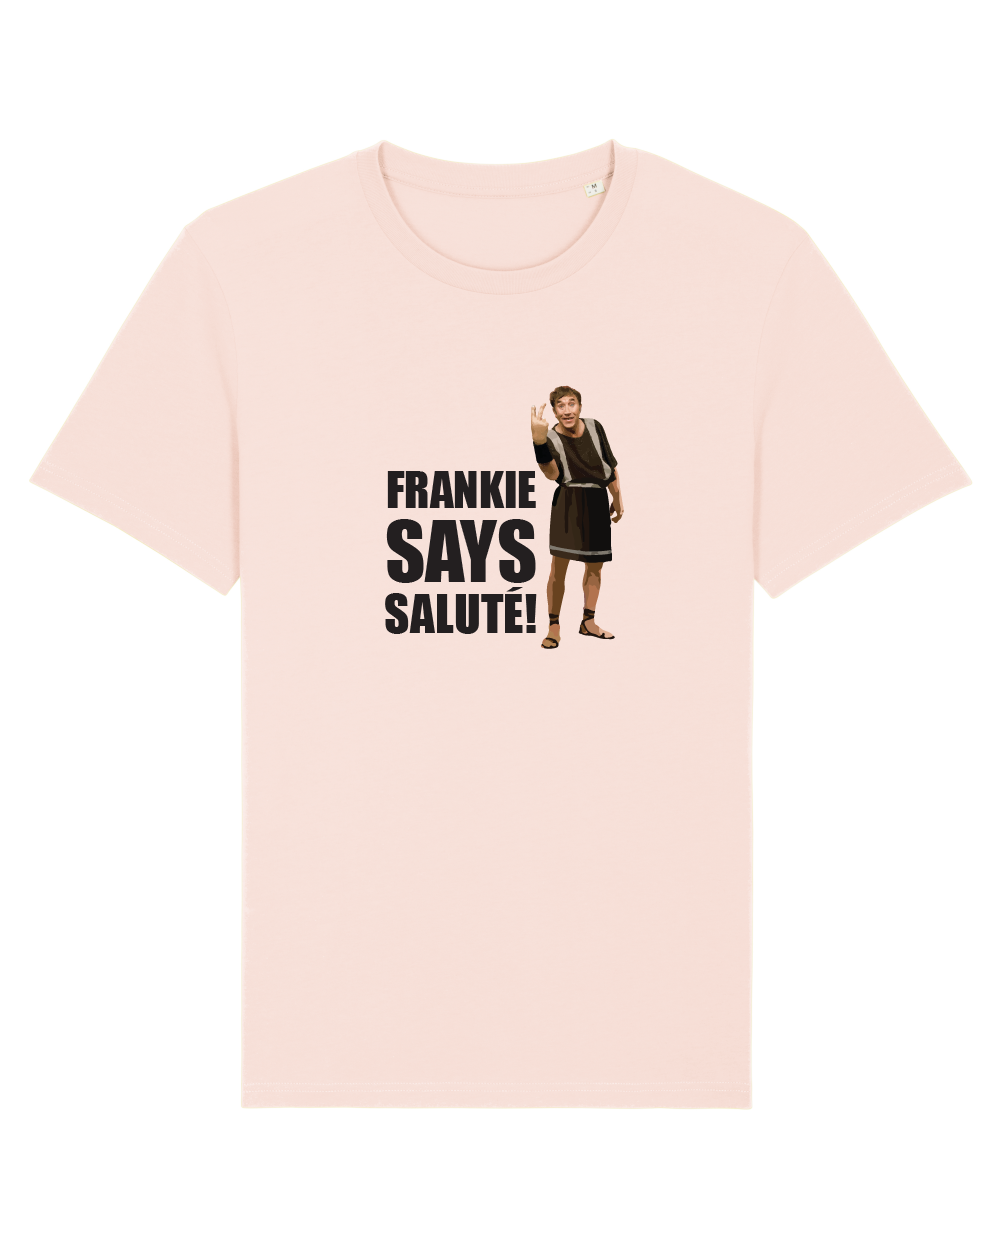 Frankie Says Salute - Unisex Tshirt